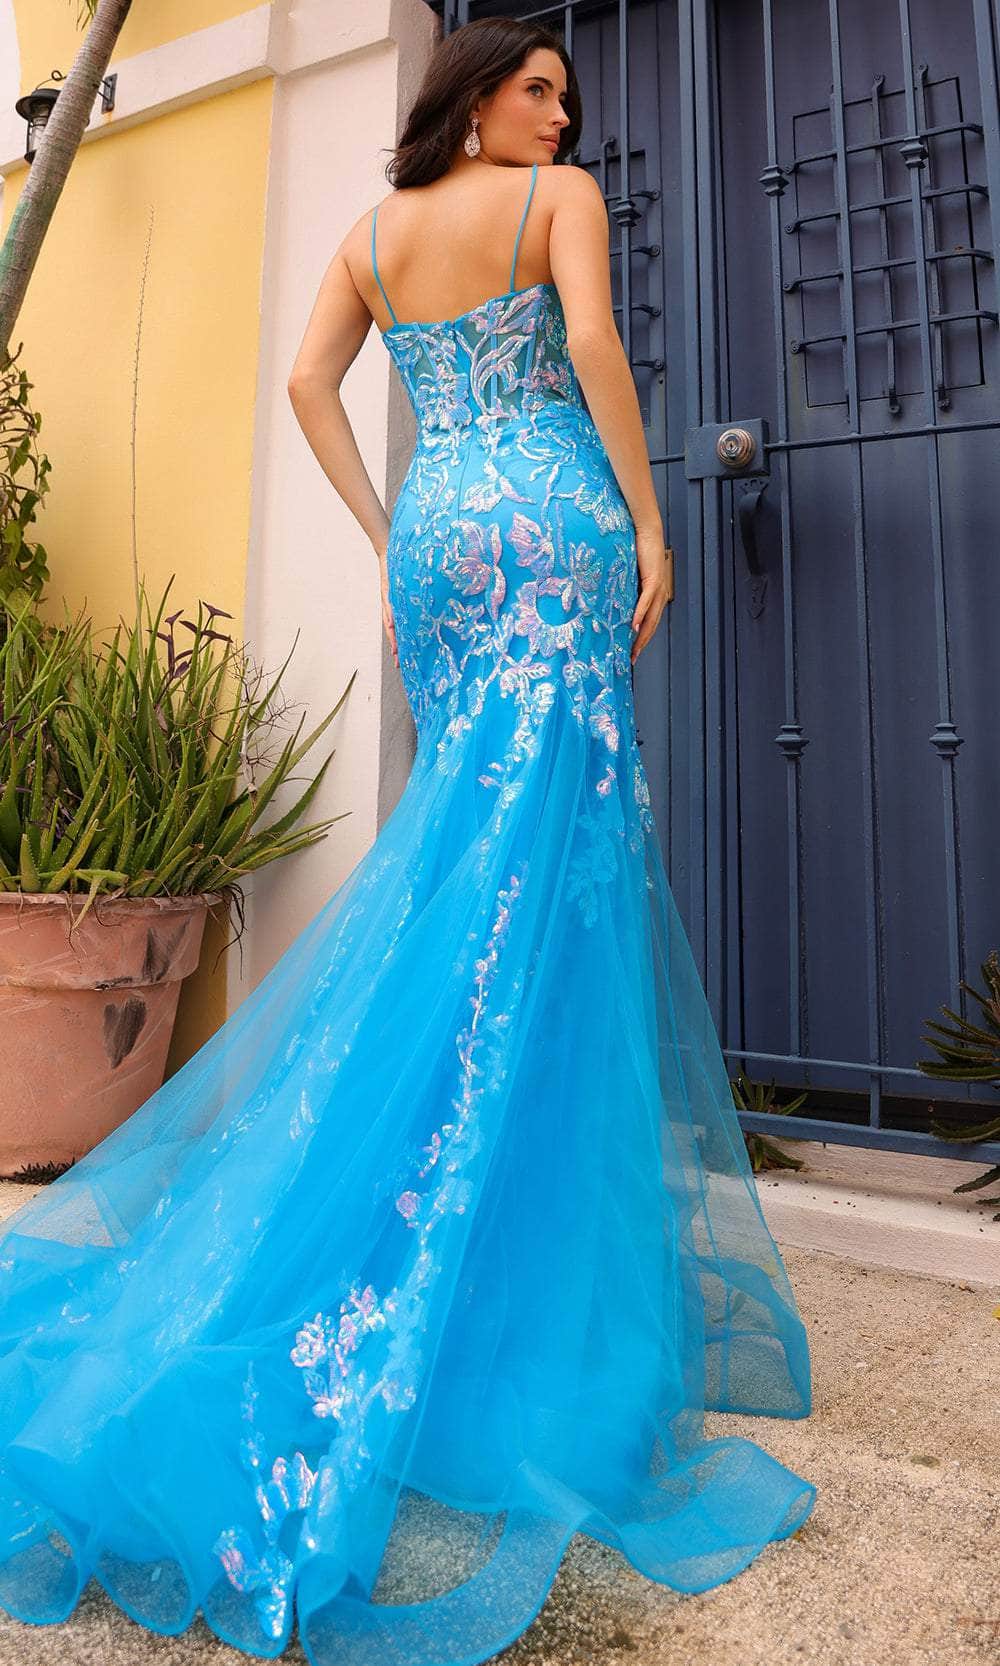 Nox Anabel Q1390 - Vibrant Corset Prom Dress Special Occasion Dresses 